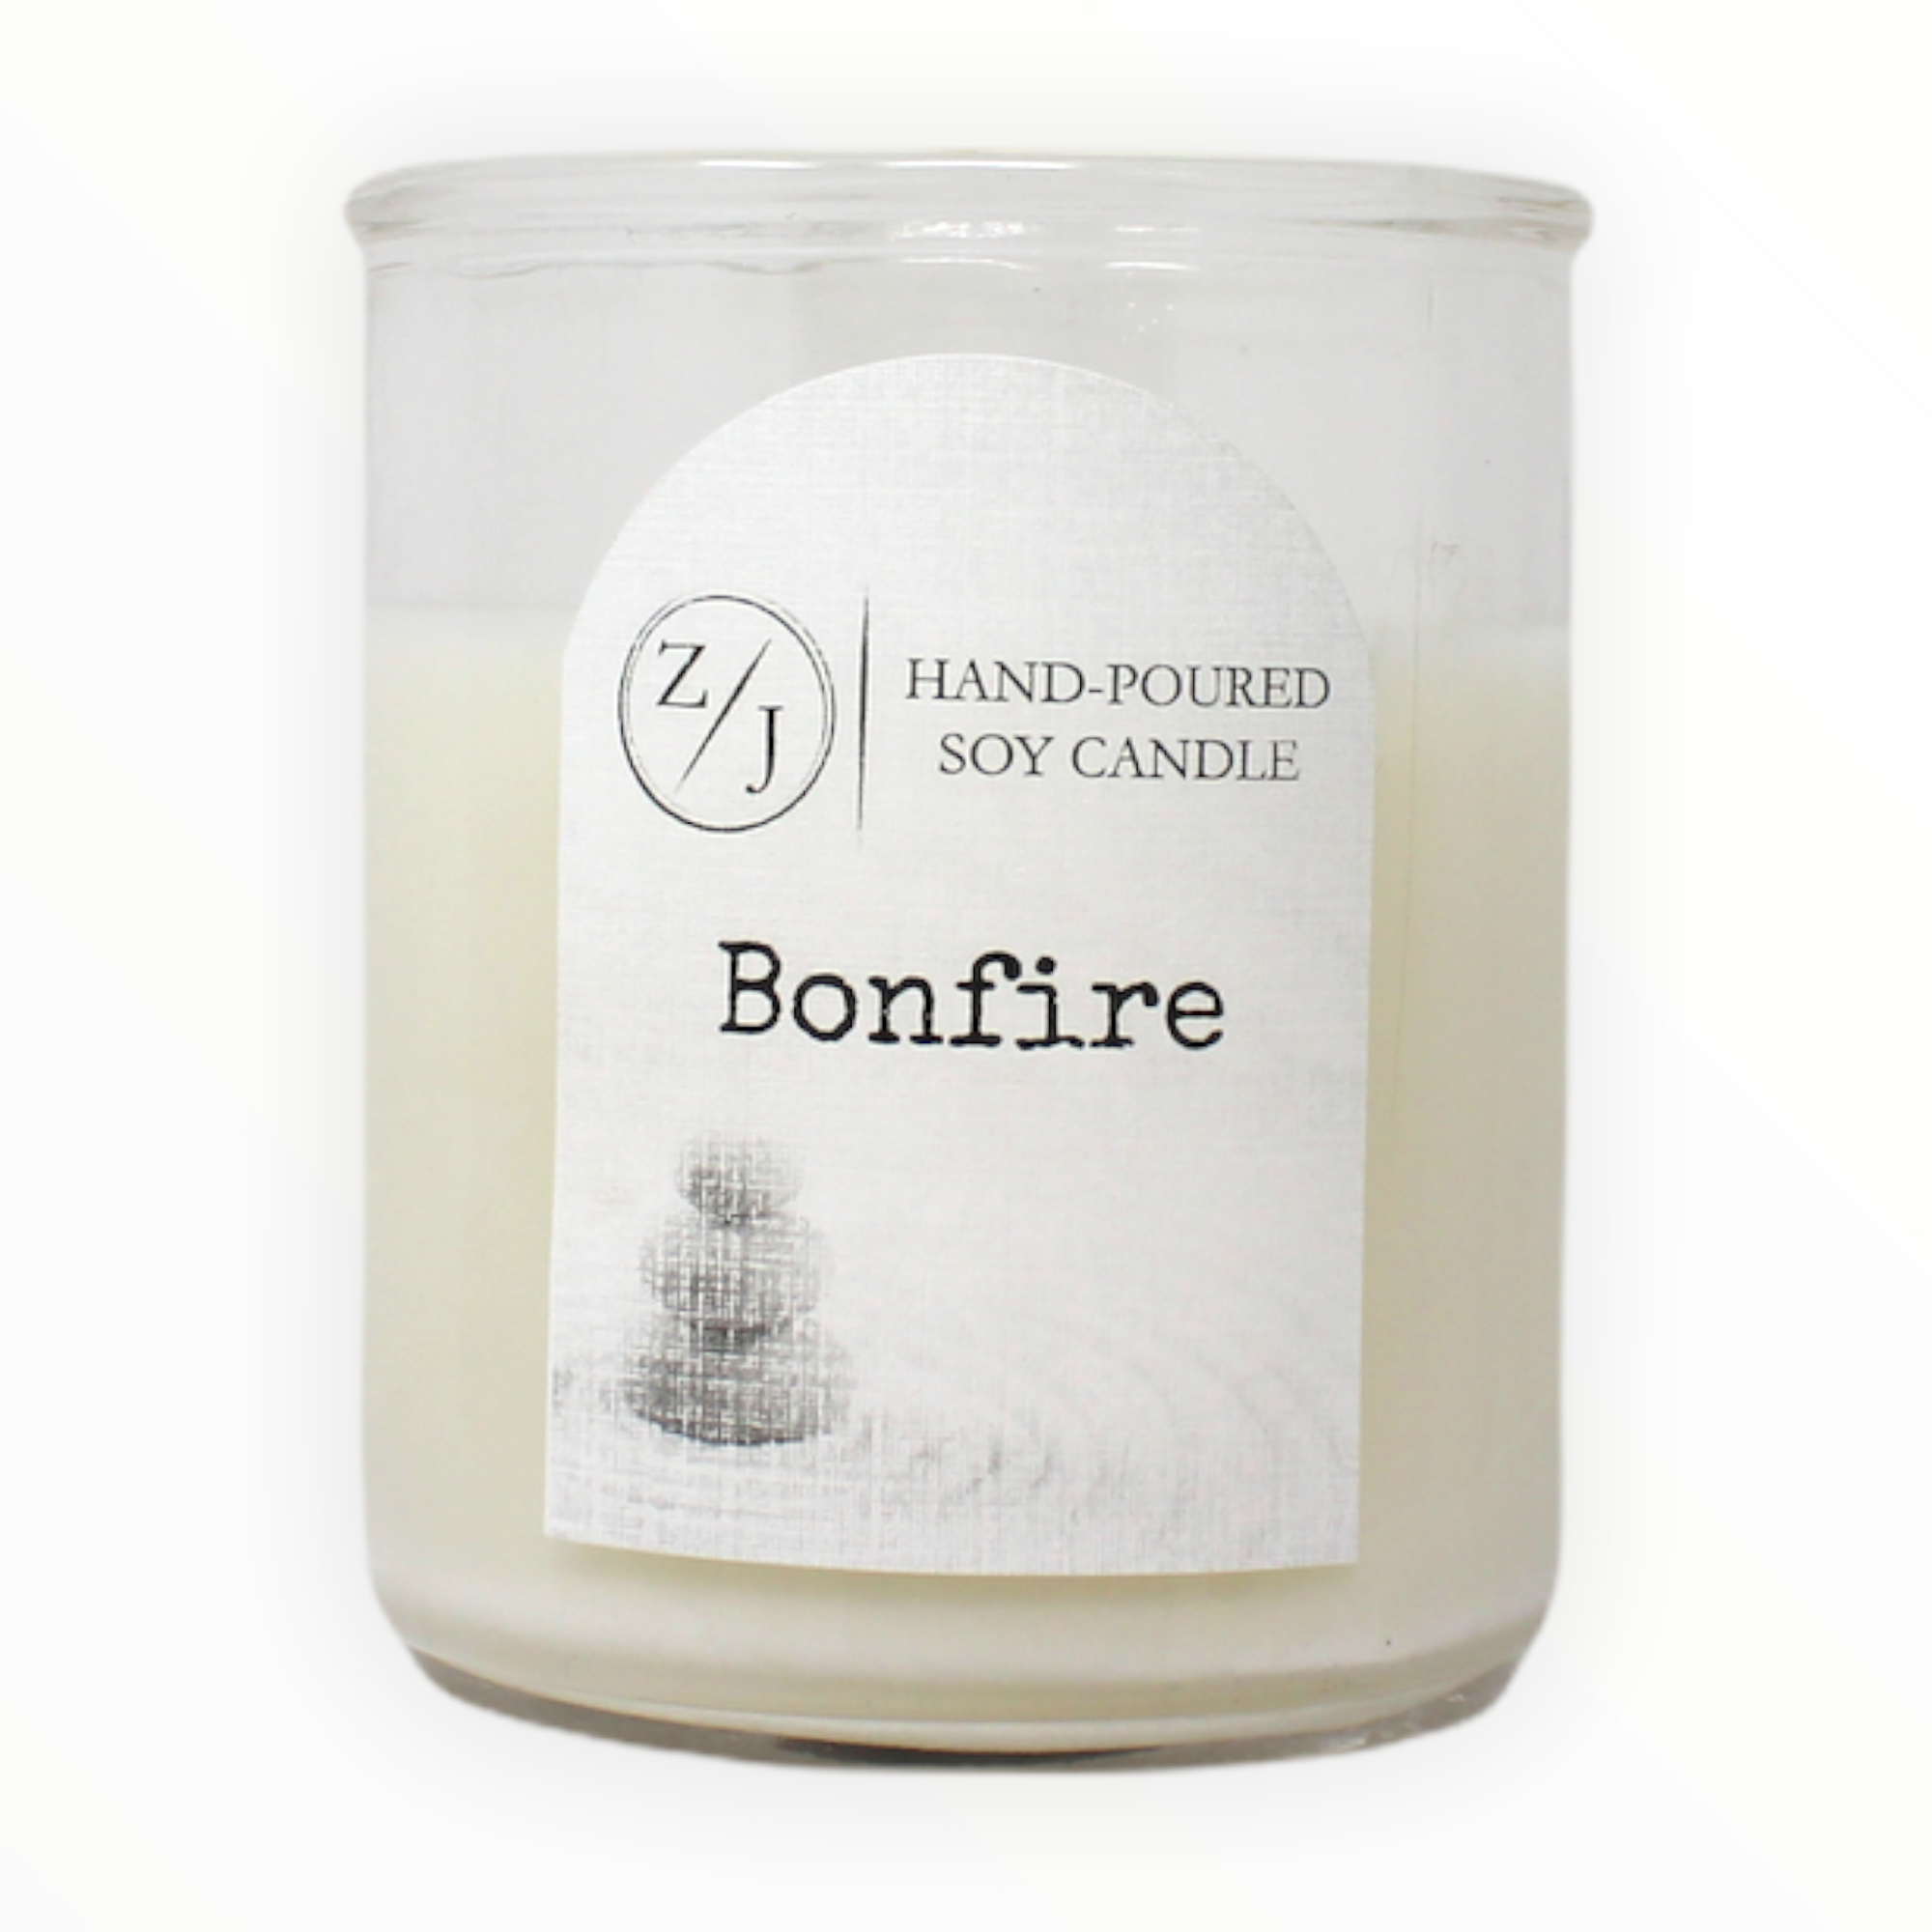 Bonfire Soy Candle